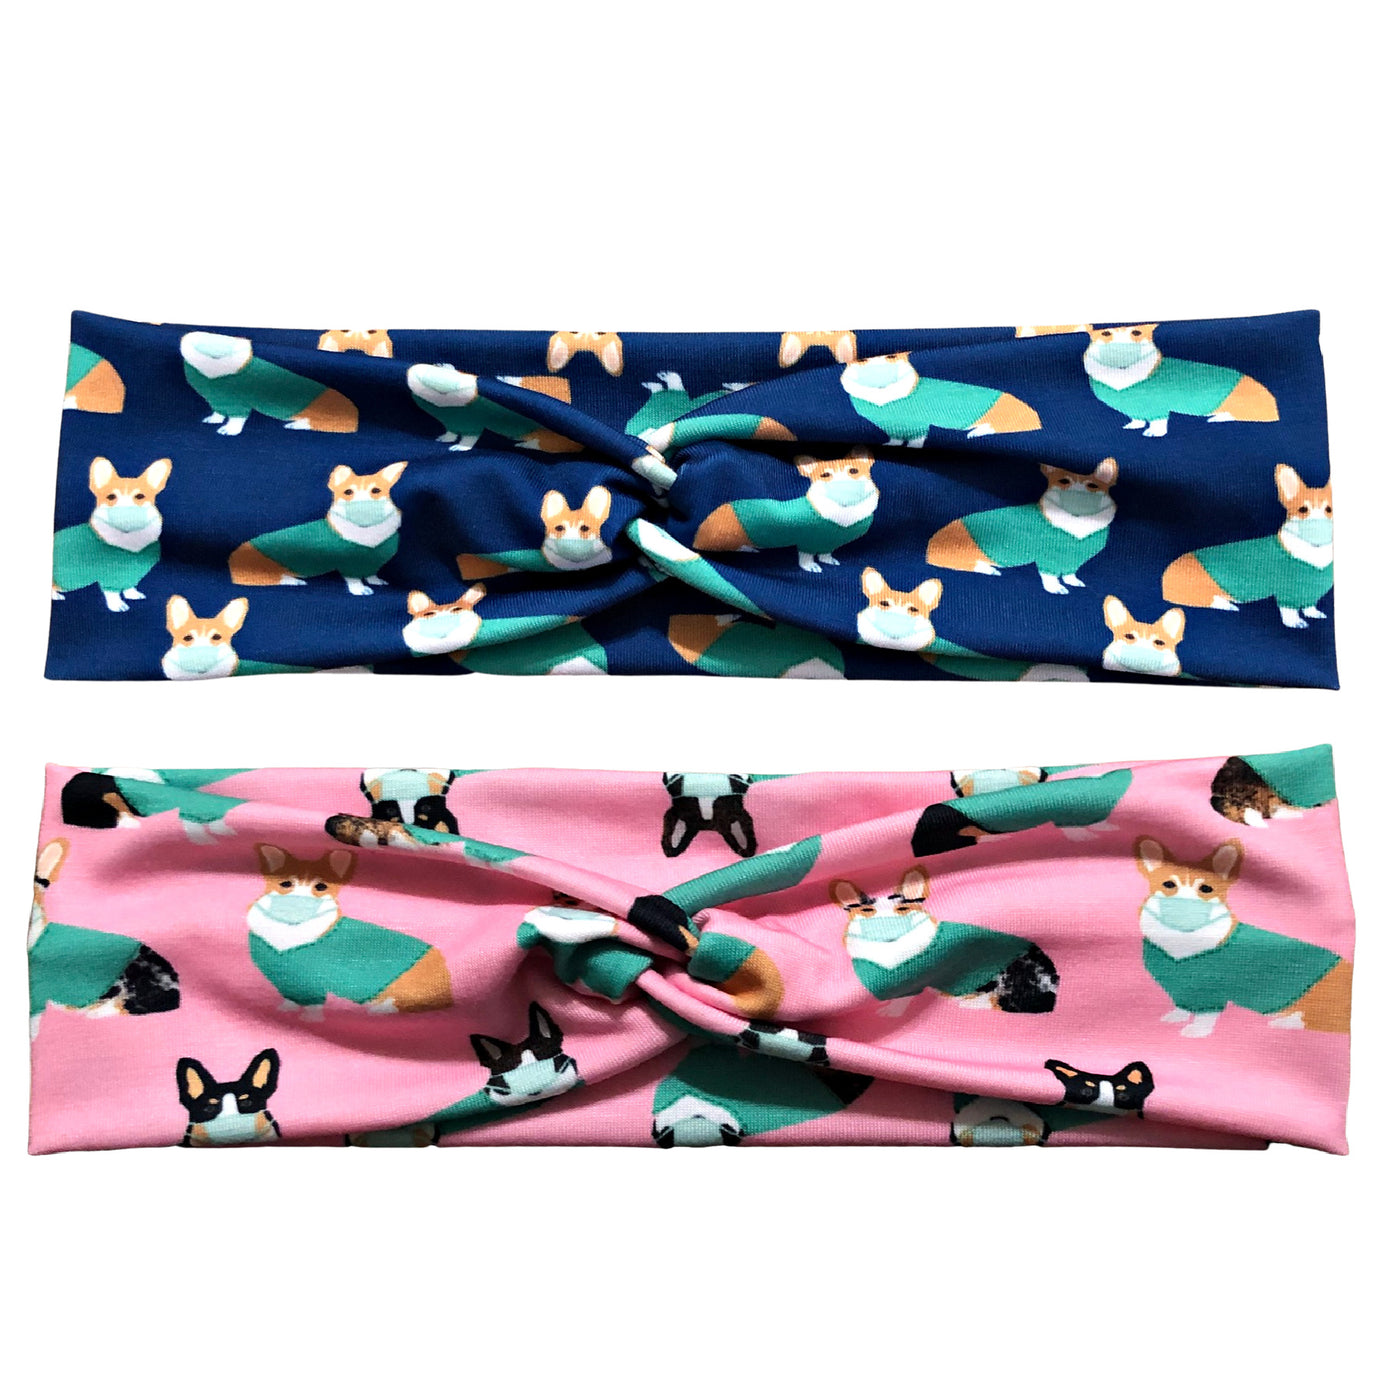 Cute Corgi Dogs in Scrubs Print Headband for Women, Pink or Navy Blue